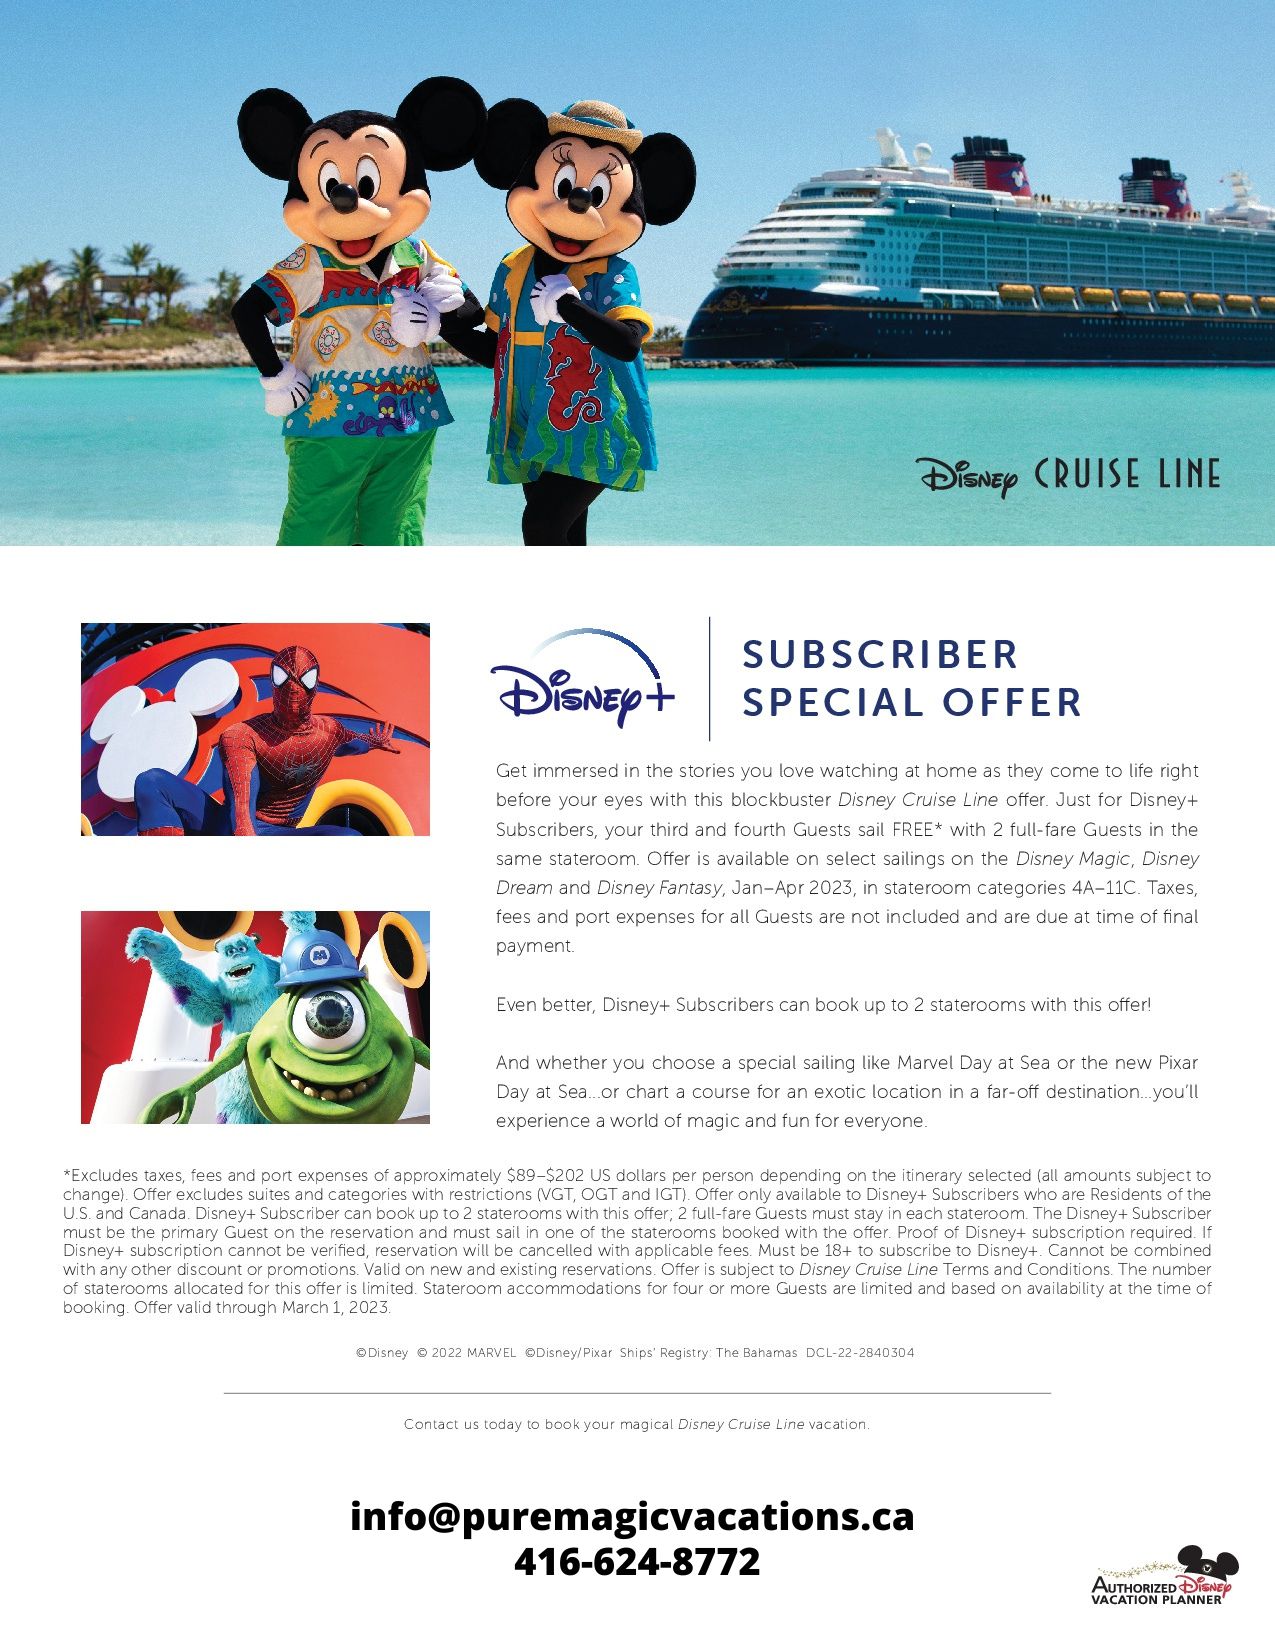 Disney Cruise Line - Disney+ Subscriber Special Offer